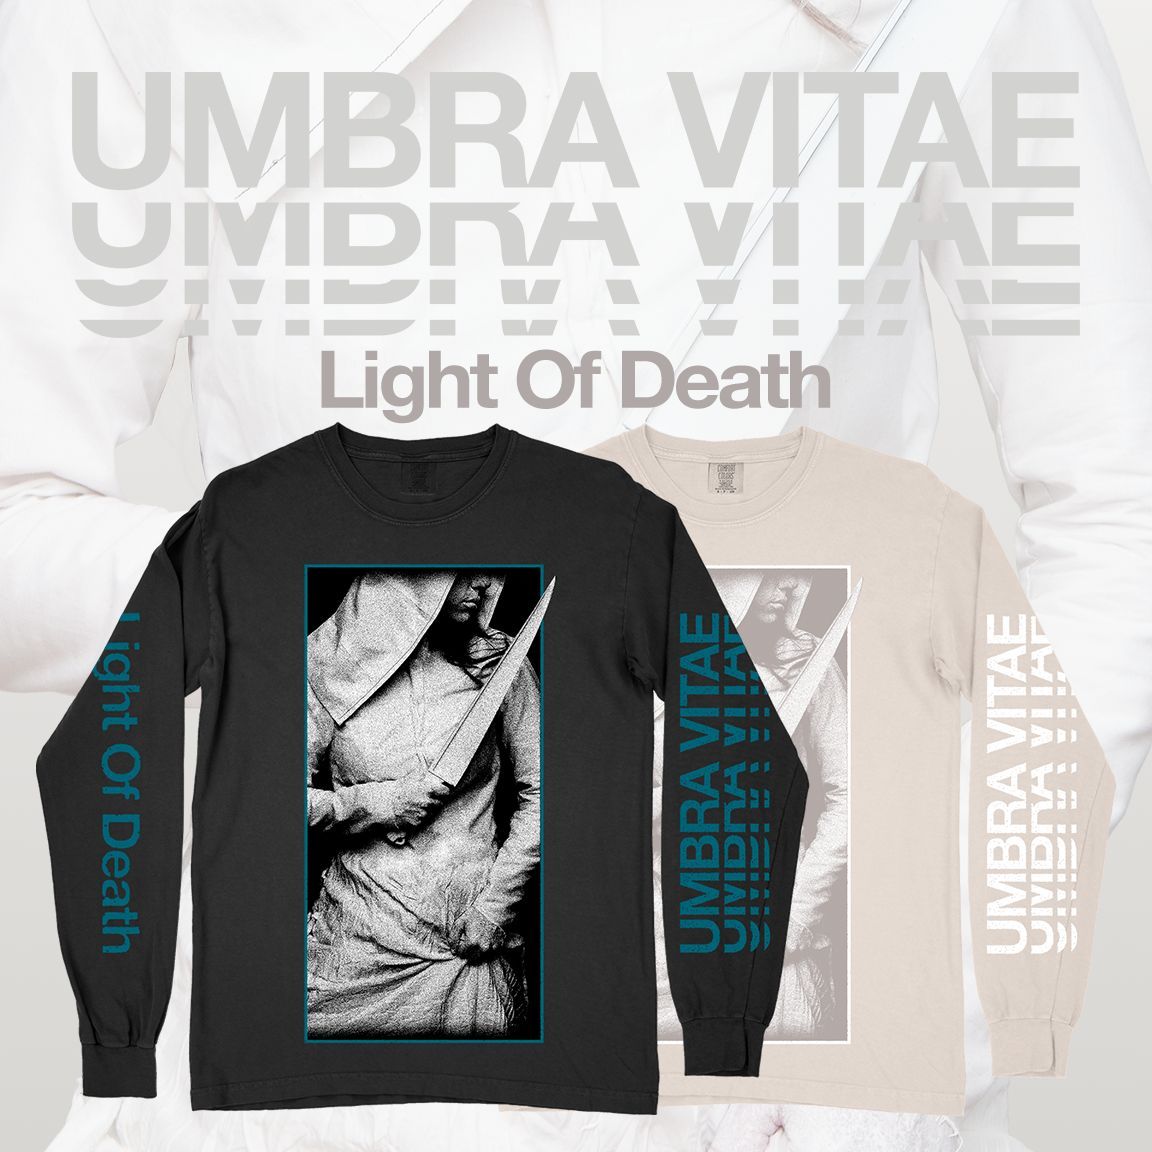 Umbra Vitae 'Light Of Death' out June 7th 🔪 Music & Merch: umbravitae.com Artwork/Photography by Juha Arvid Helminen Model: Regina Art Direction & Design by J. Bannon #UmbraVitae #LightOfDeath #DeathwishInc #DeathwishEurope